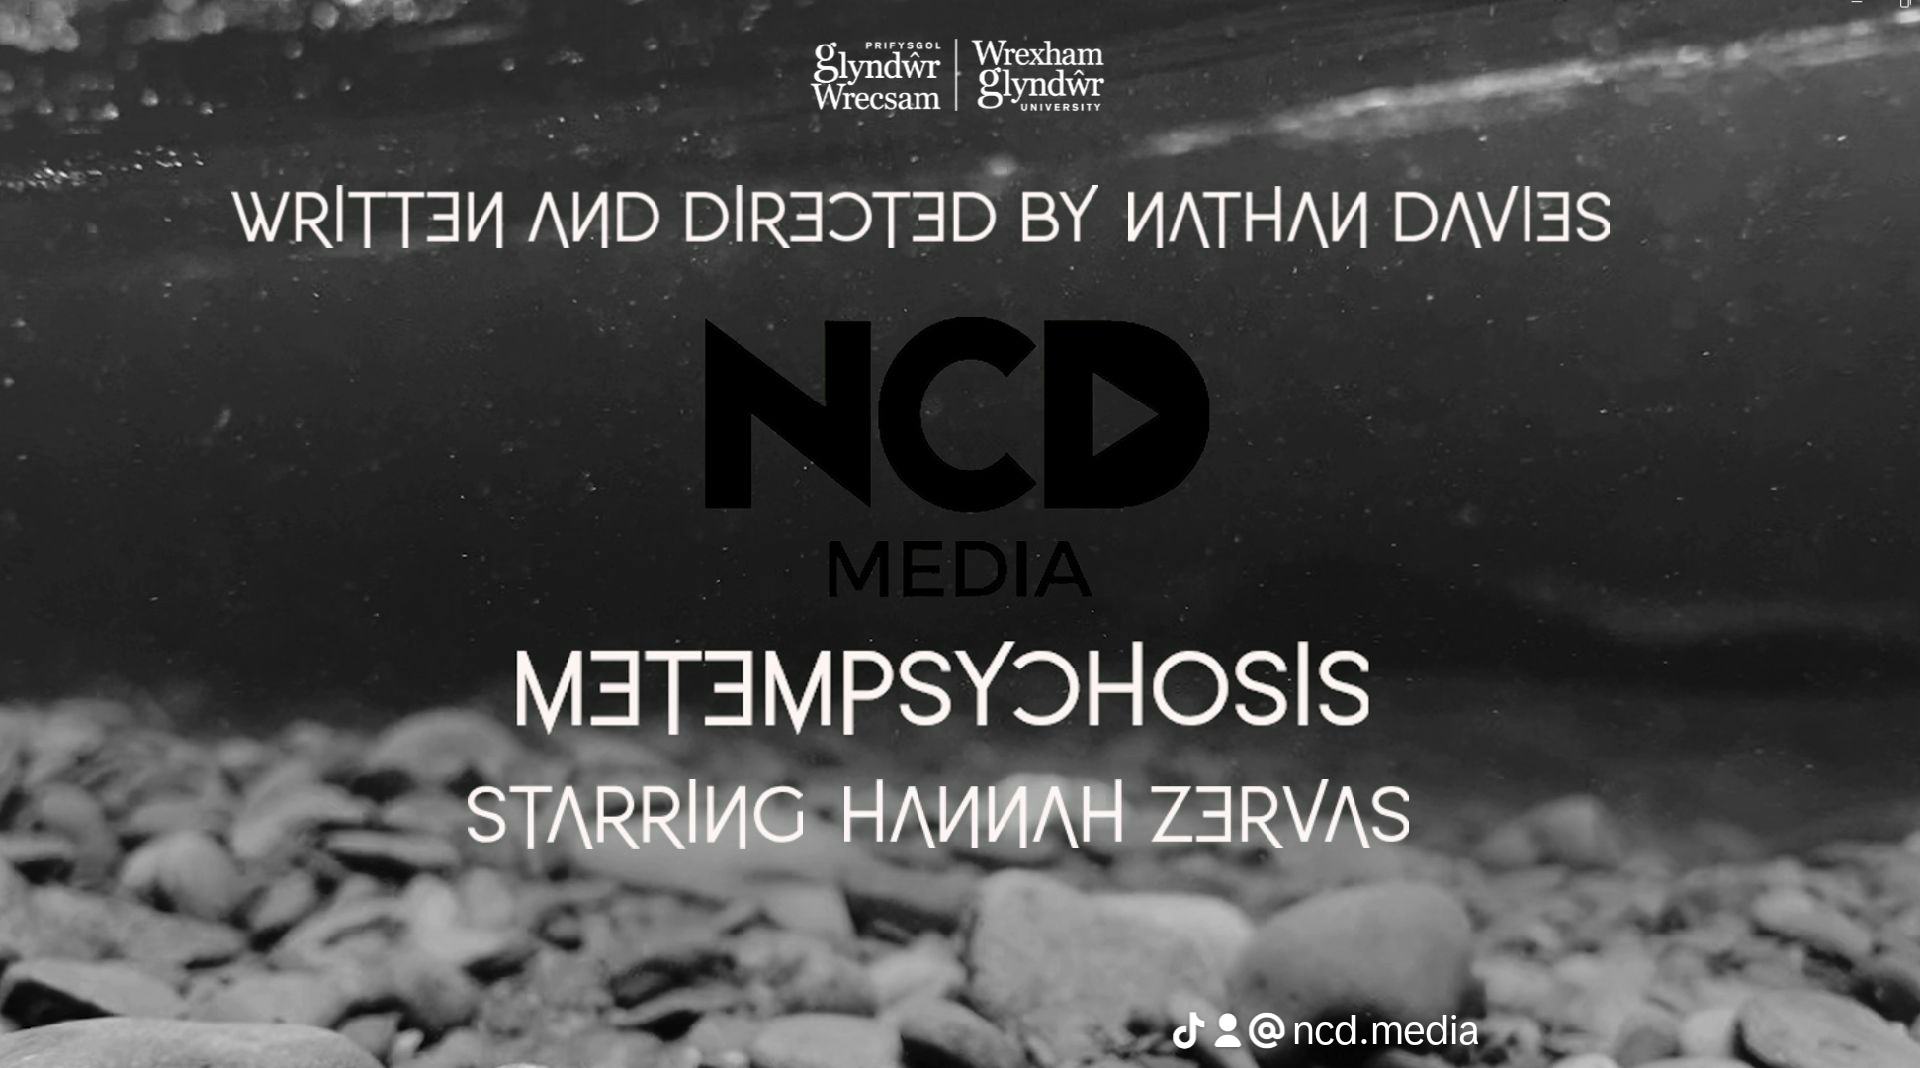 Metempsychosis - A film by Nathan Davies